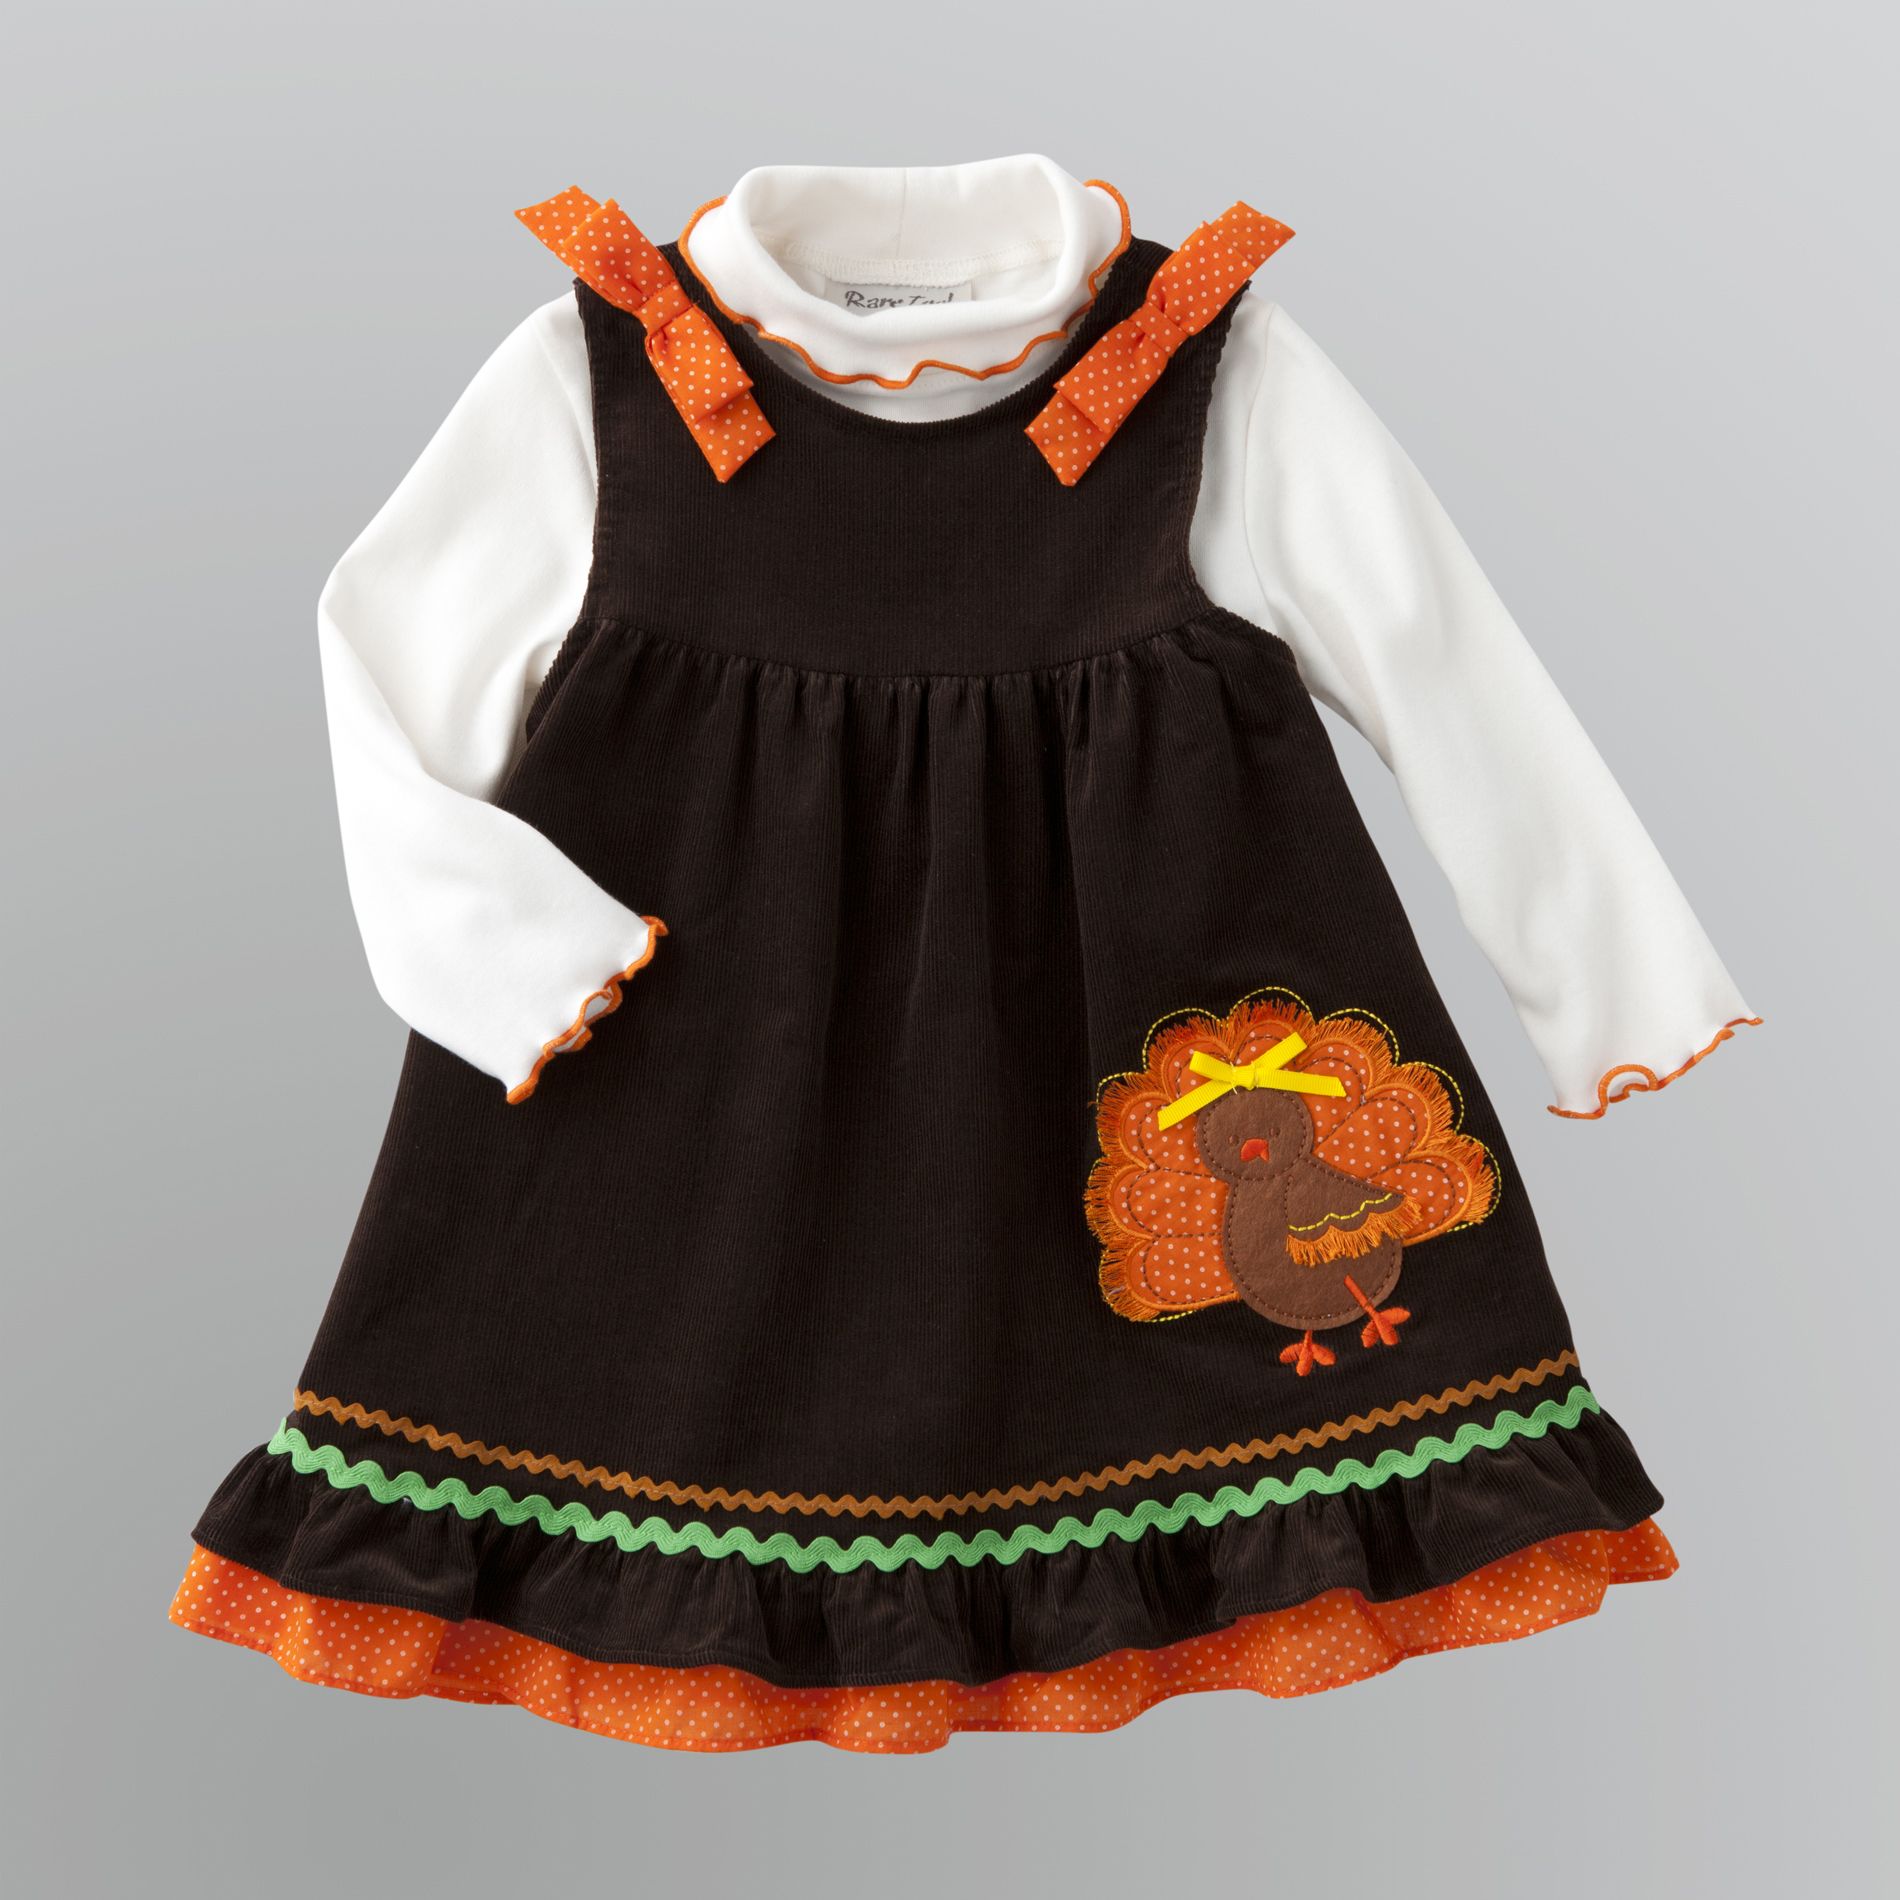 Rare Too Infant & Toddler Girl's Harvest Turkey Jumper Dress